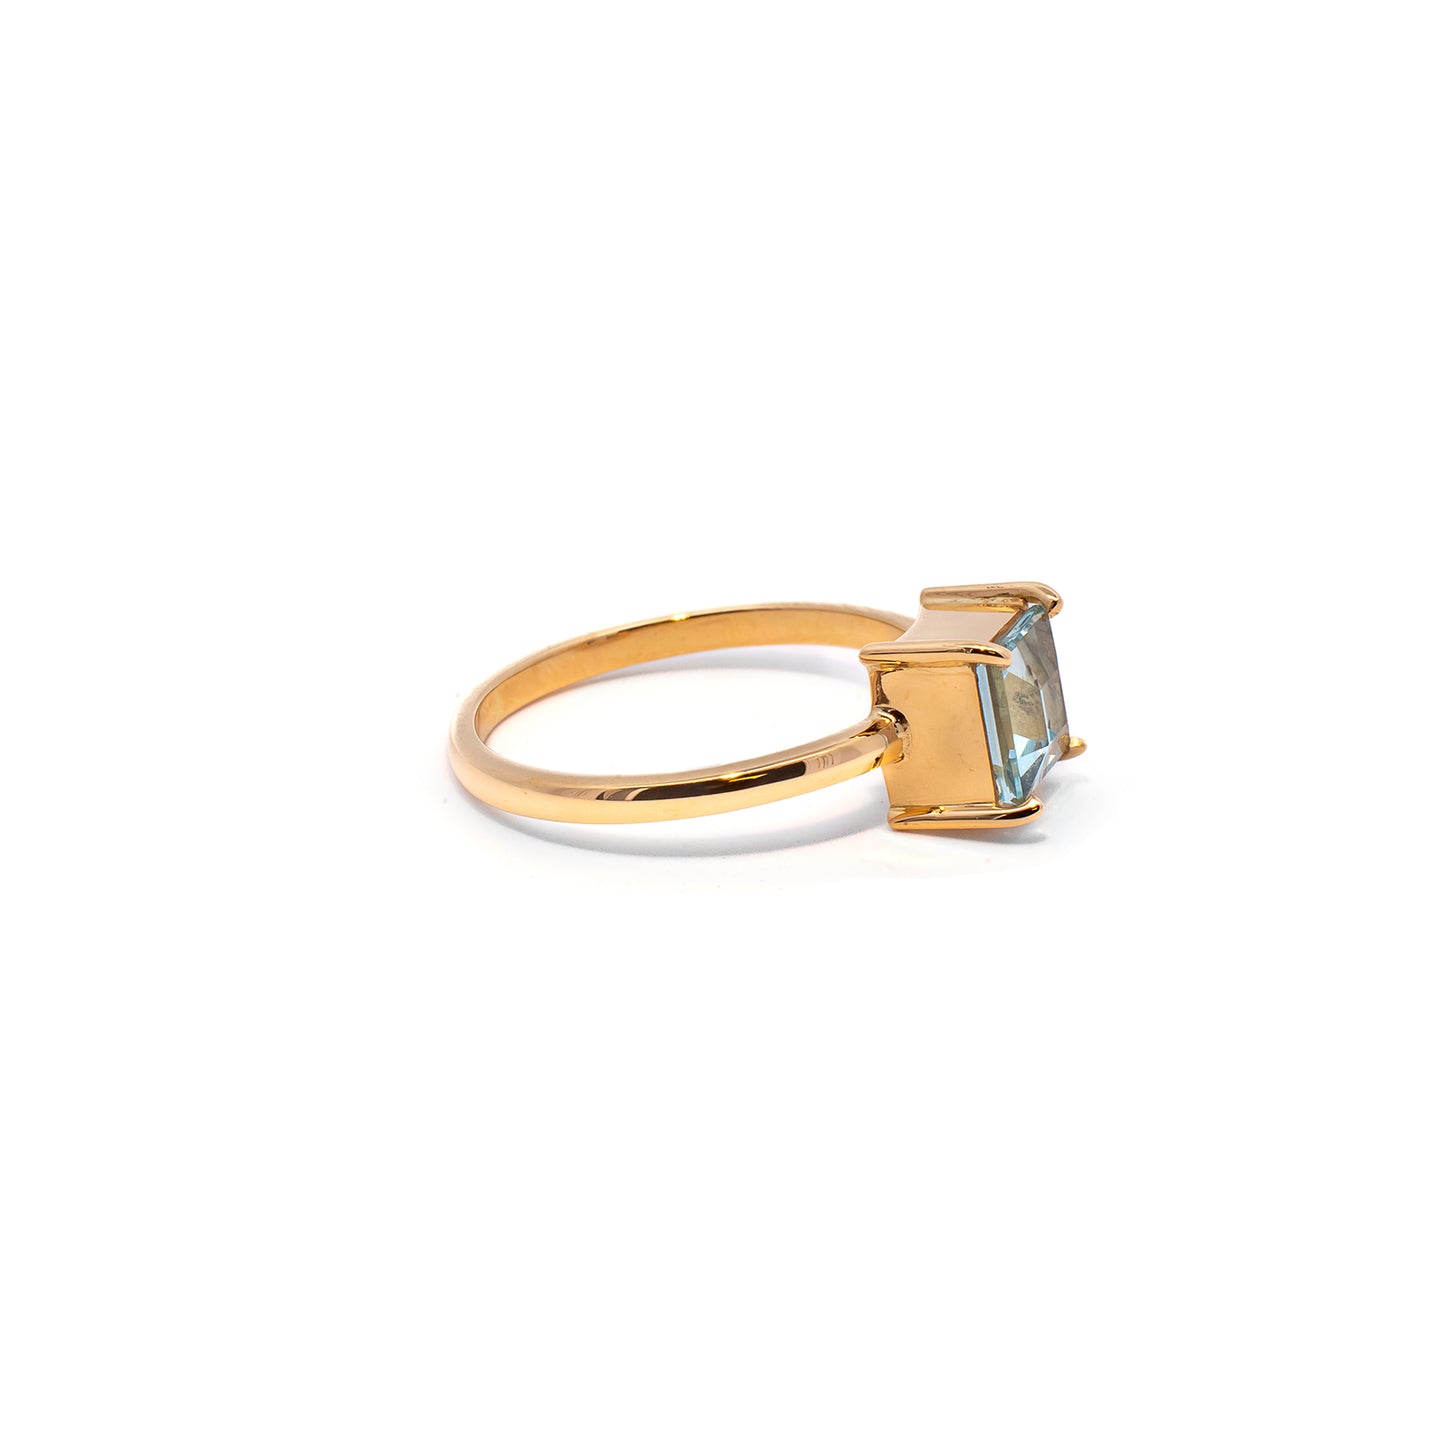 Edelsteinring Aquamarin Gelbgold 18K 750 Damenschmuck Goldring gemstone ring